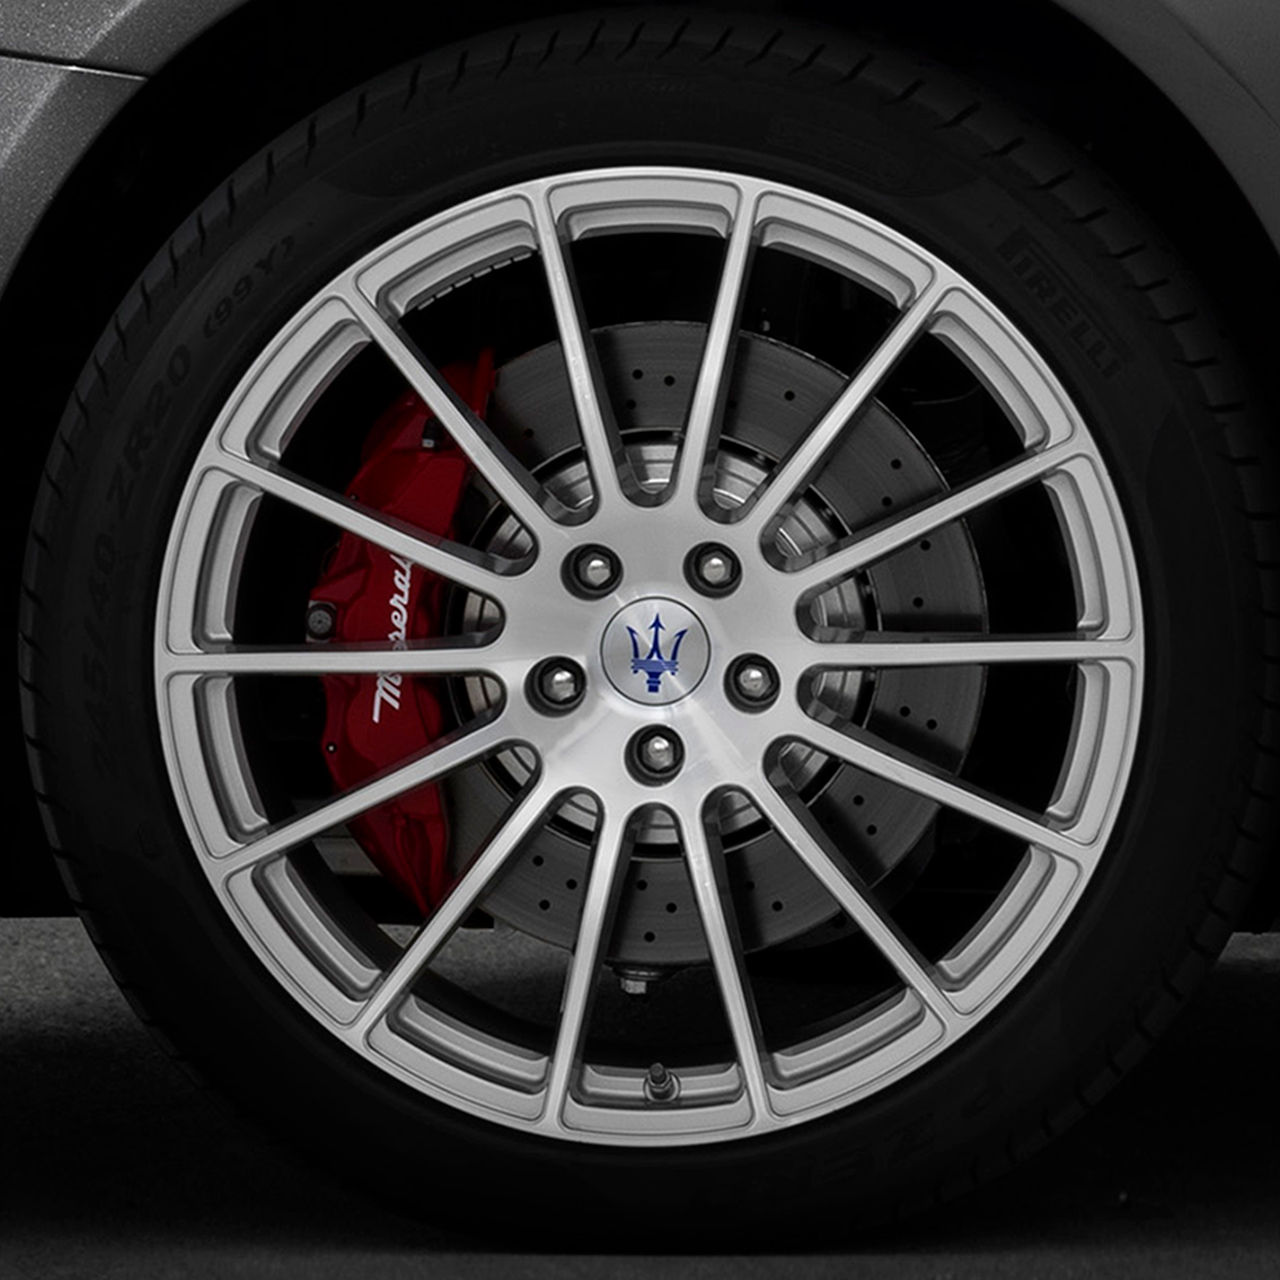 Maserati Quattroporte - Rad, Felge und Reifen Detail